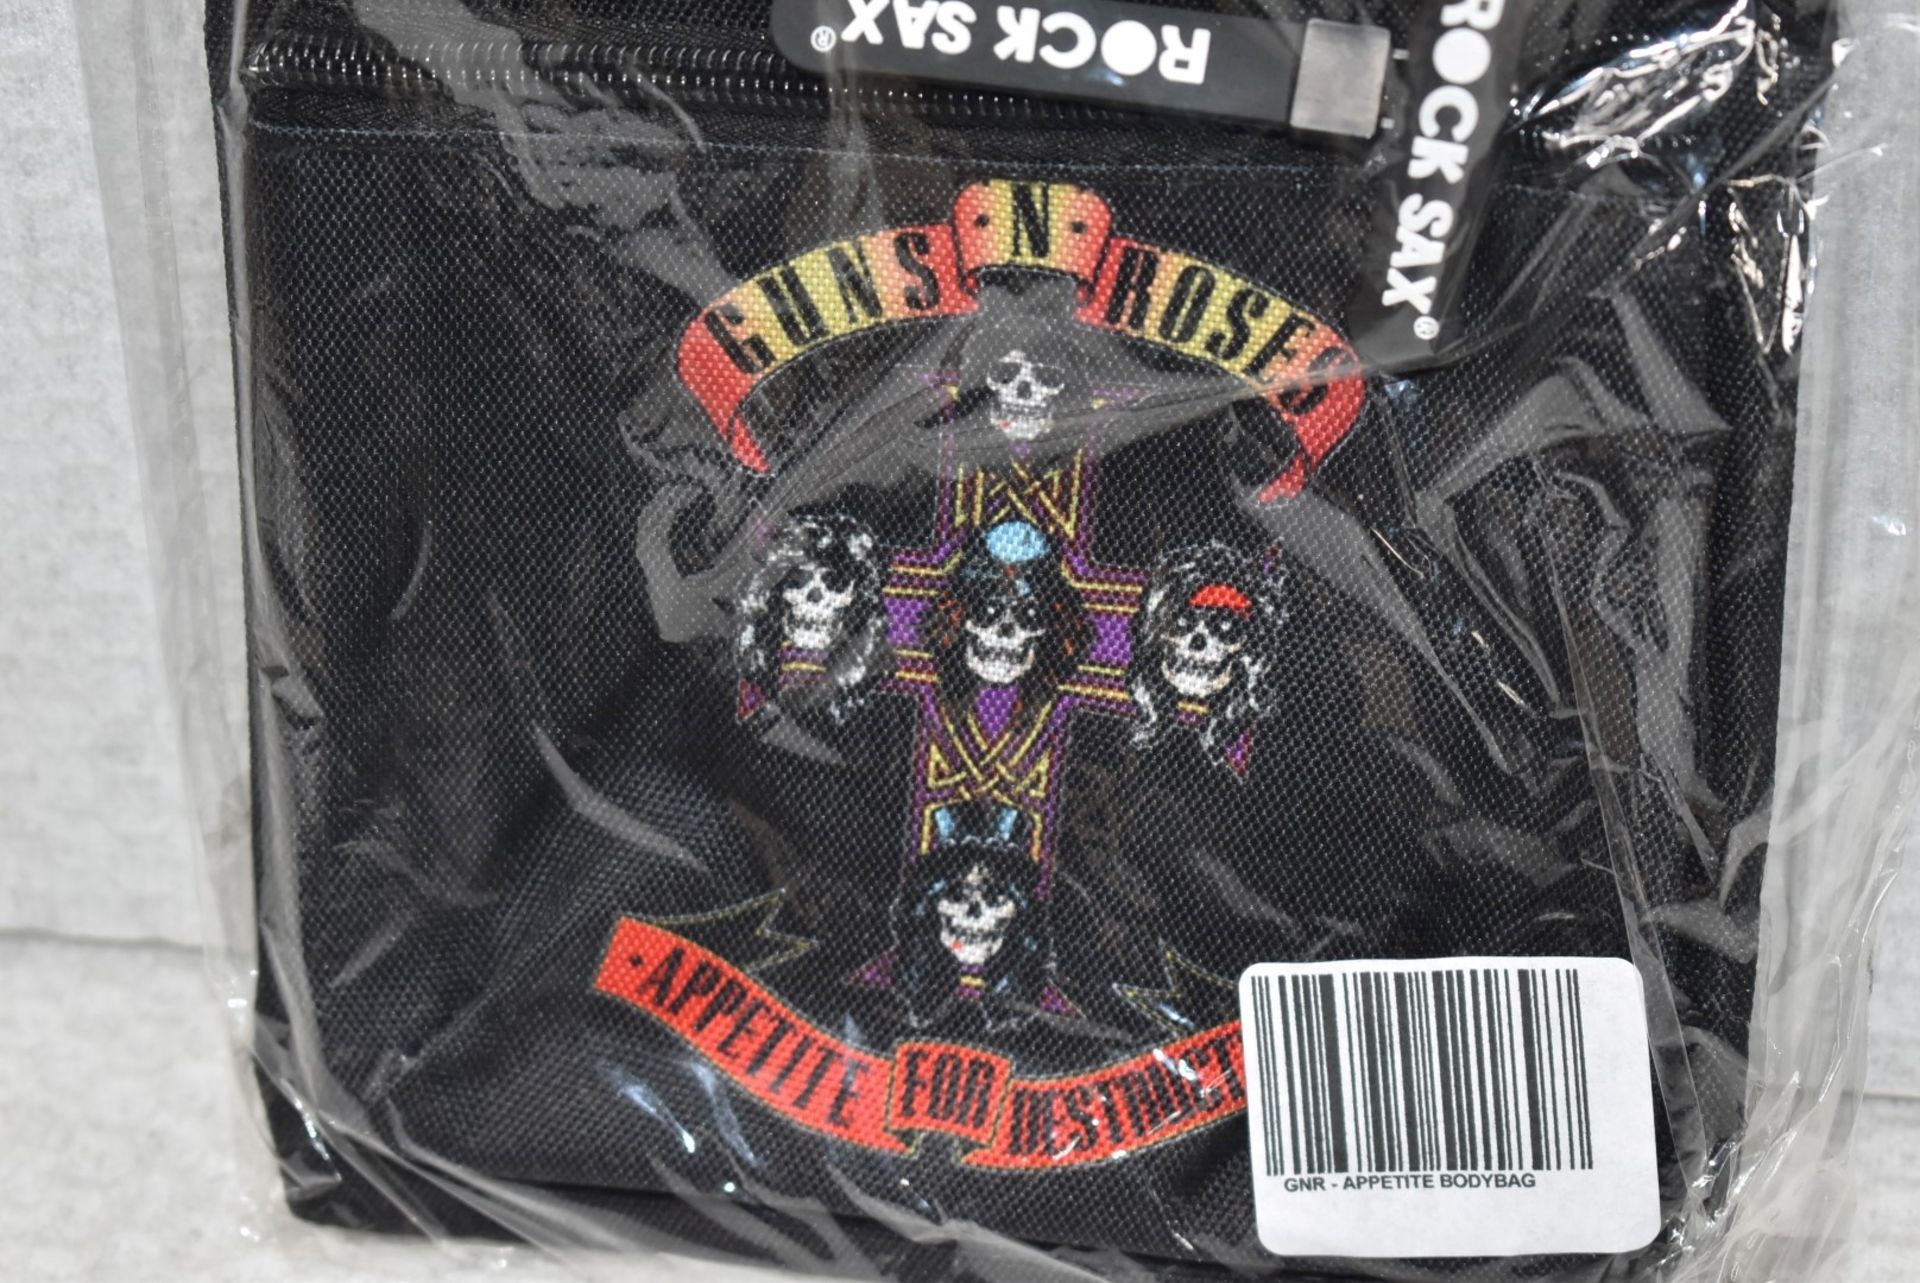 1 x Guns N Roses Cross Body Festival Bag by Rock Sax - Iconic Appetite For Destruction Logo - - Image 3 of 4